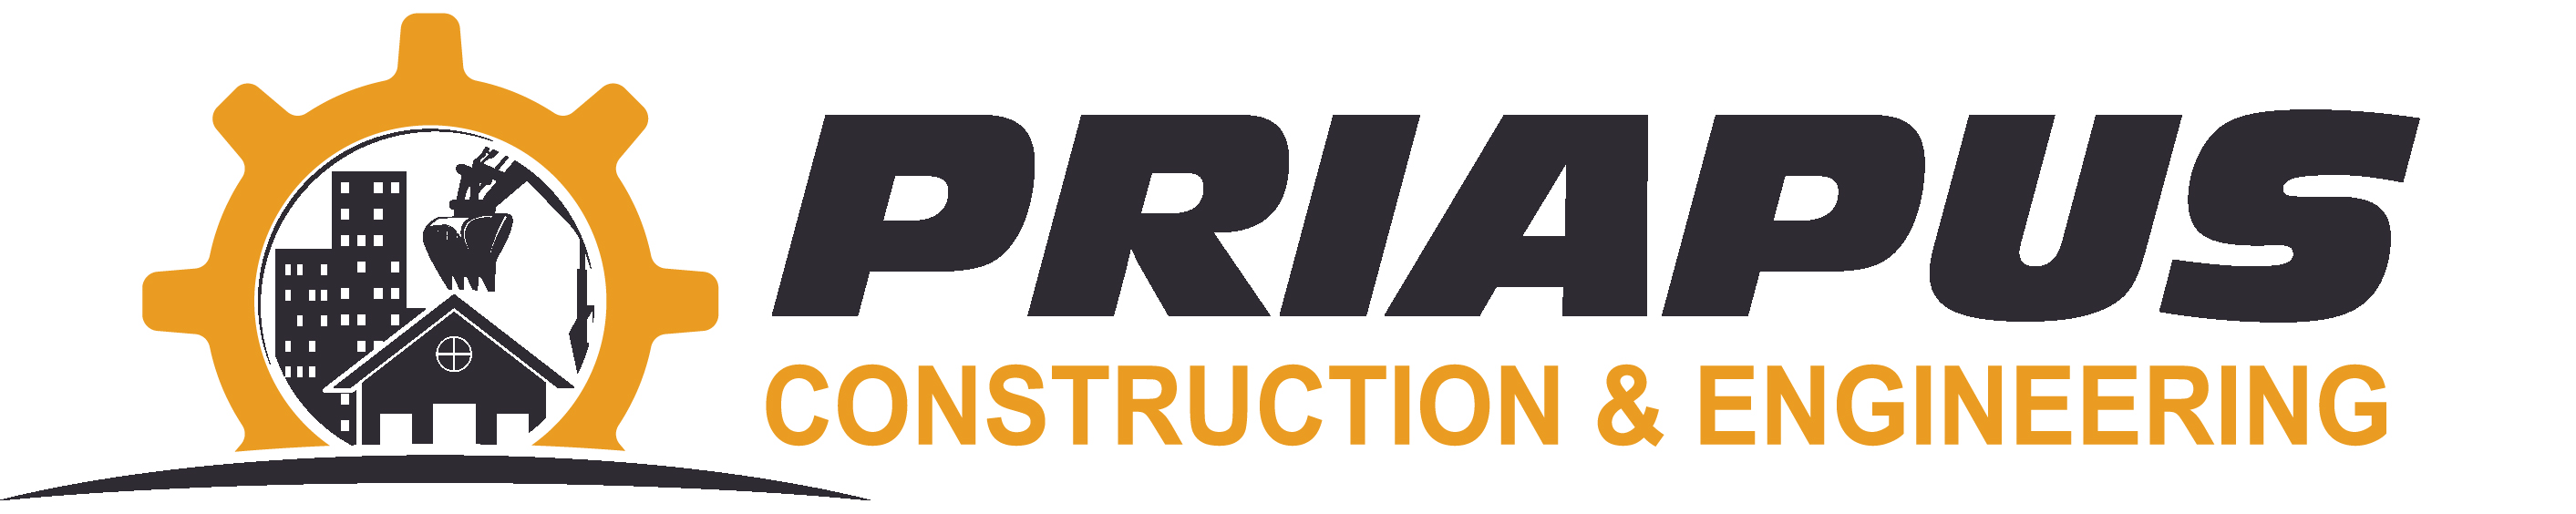 Priapus Construction & Engineering (Pty) Ltd